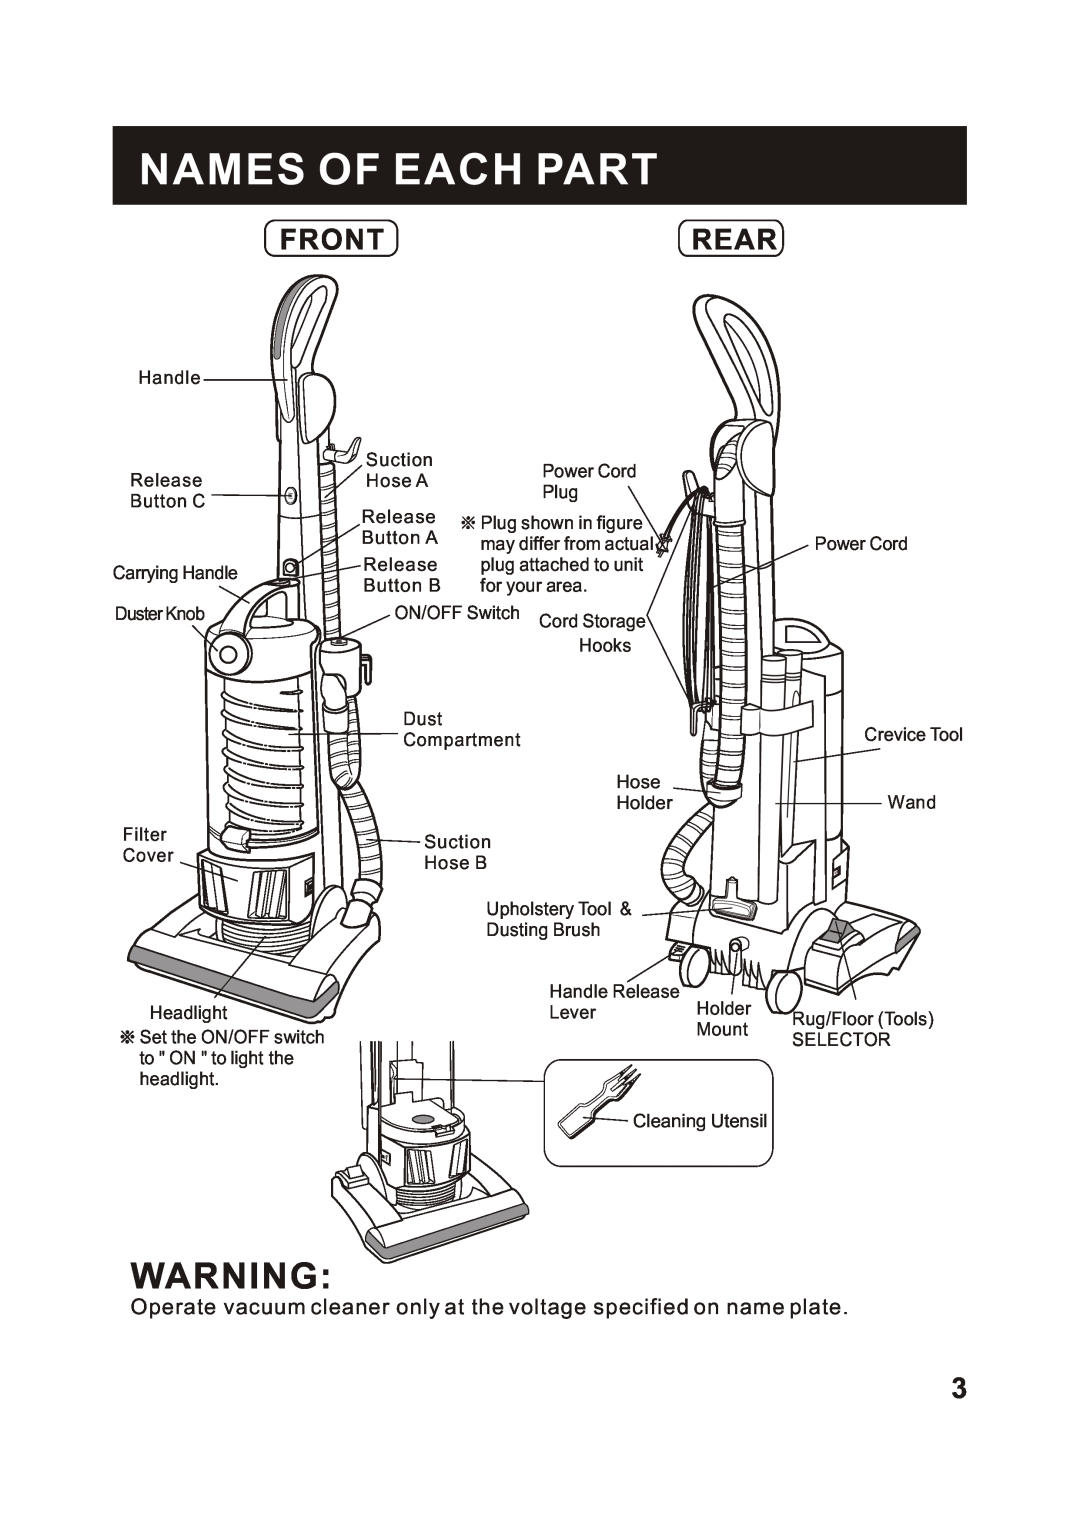 Fantom Vacuum FM655CS instruction manual Names Of Each Part, Frontrear 